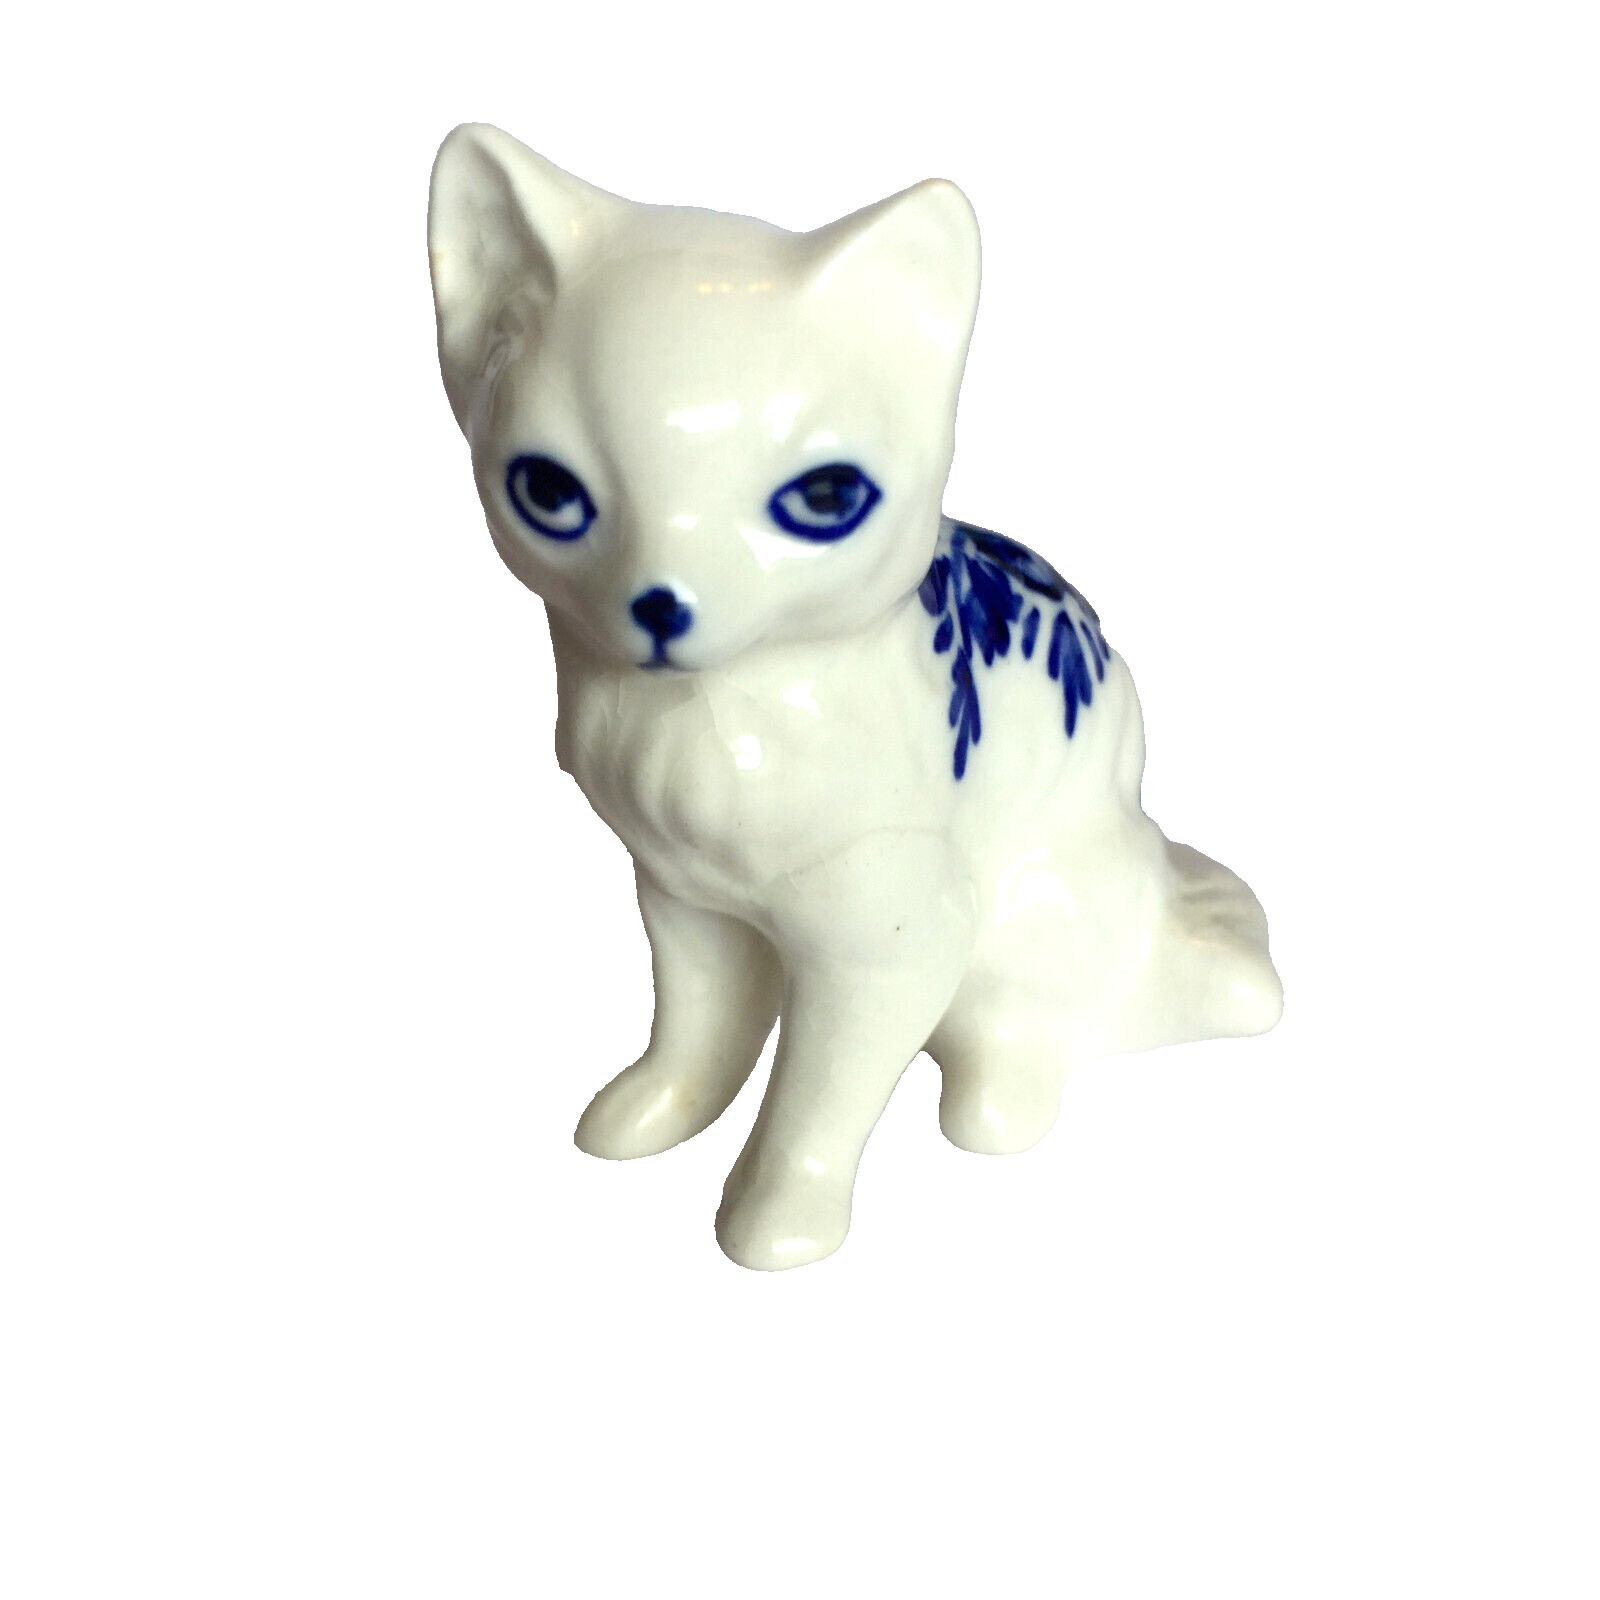 Cat/Kitten Figurine Ceramic Porcelain Miniature Blue and White Flowered Vintage